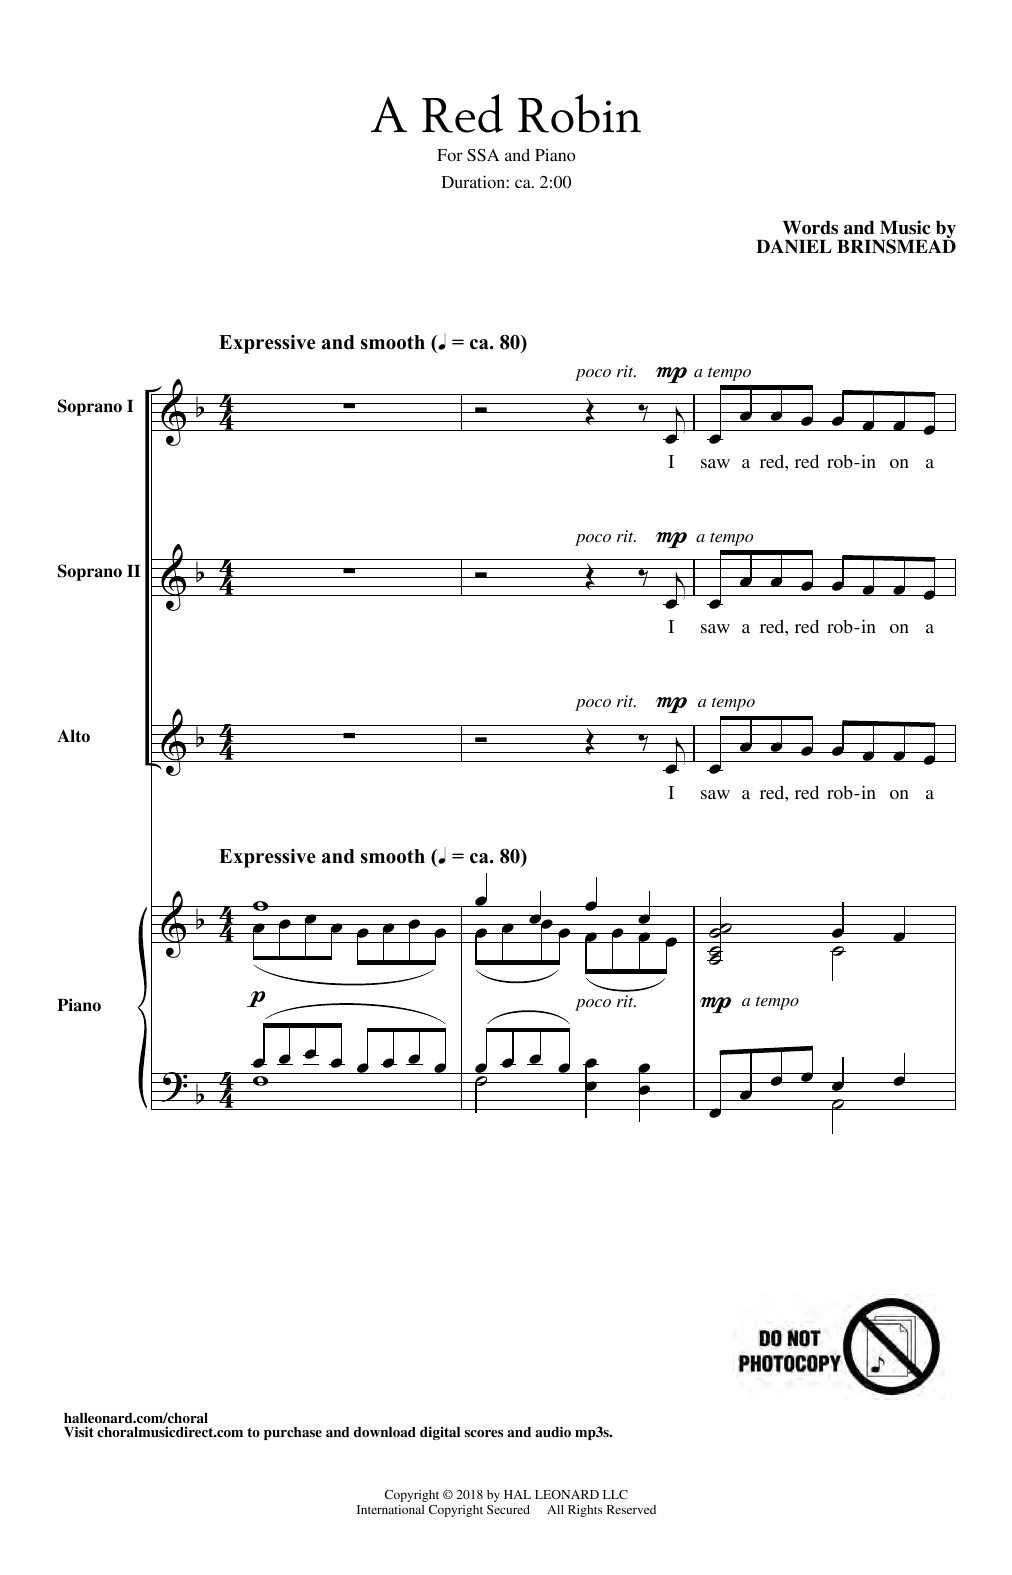 Daniel Brinsmead A Red Robin Sheet Music Notes & Chords for SSA Choir - Download or Print PDF